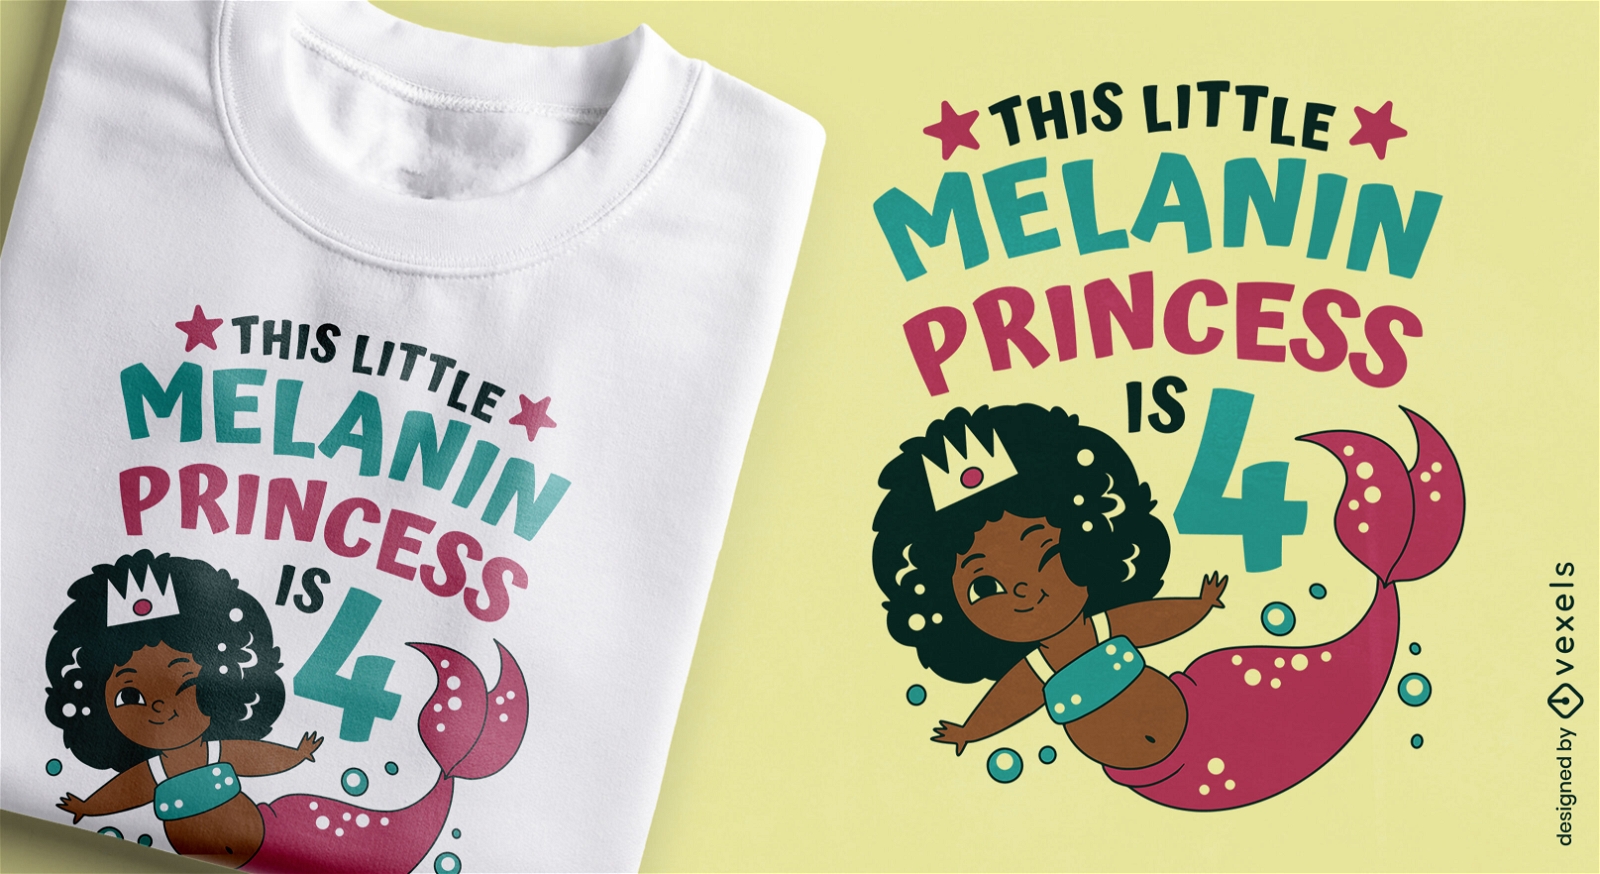 Melanin princess birtdhay t-shirt design